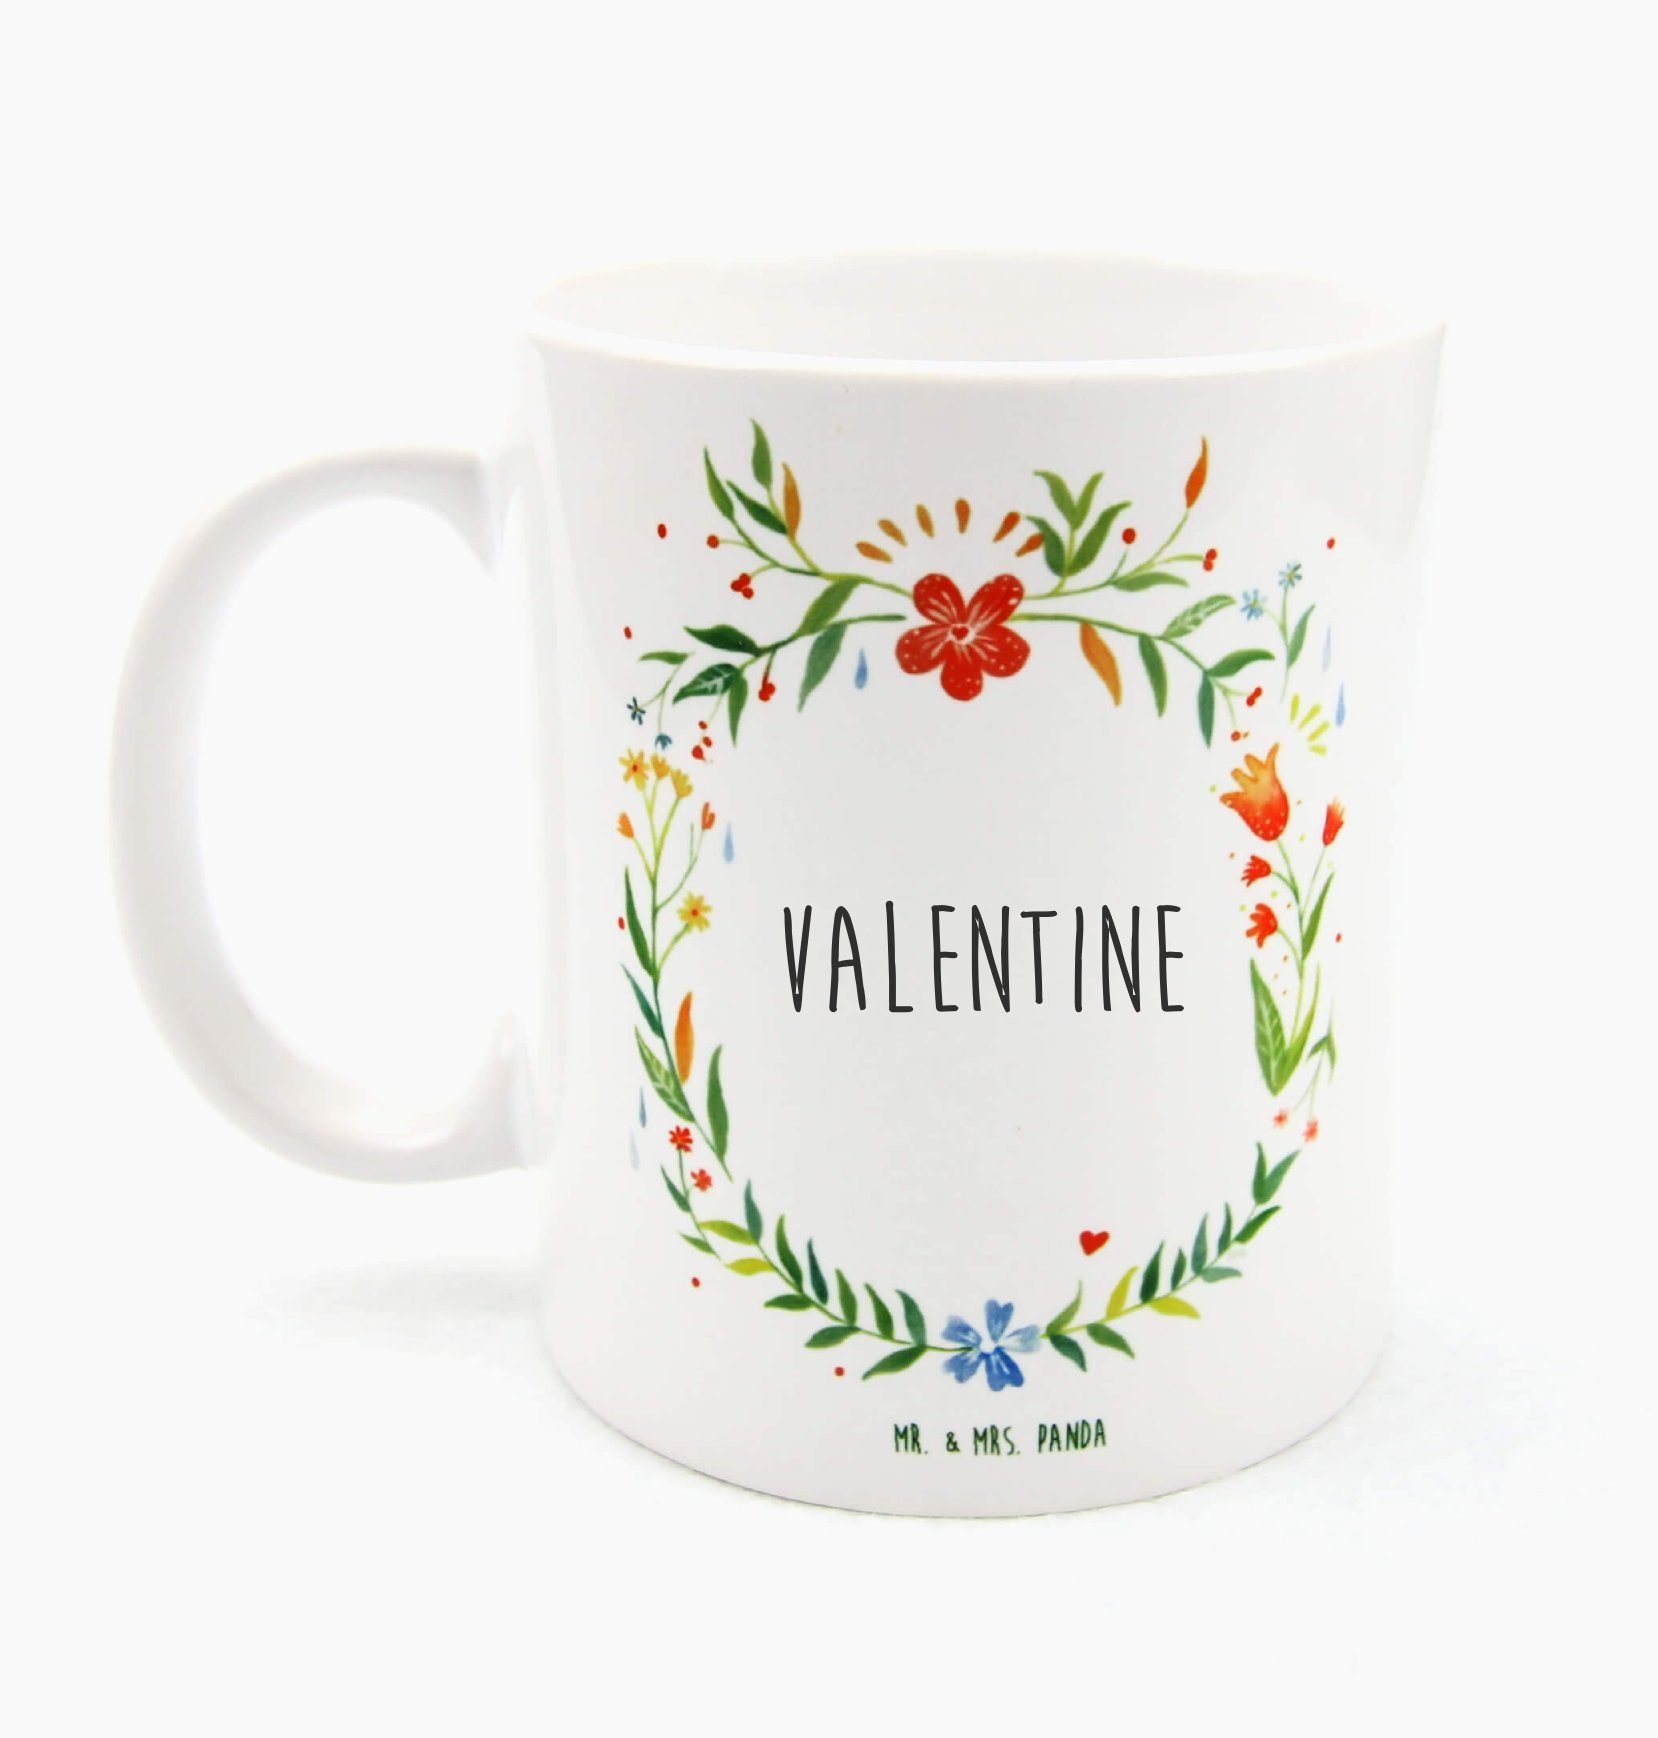 Mr. & Mrs. Panda Kaffeebecher, Motive, Keramik Kaffeetasse, Gesche, - Tasse Valentine Geschenk, Tasse